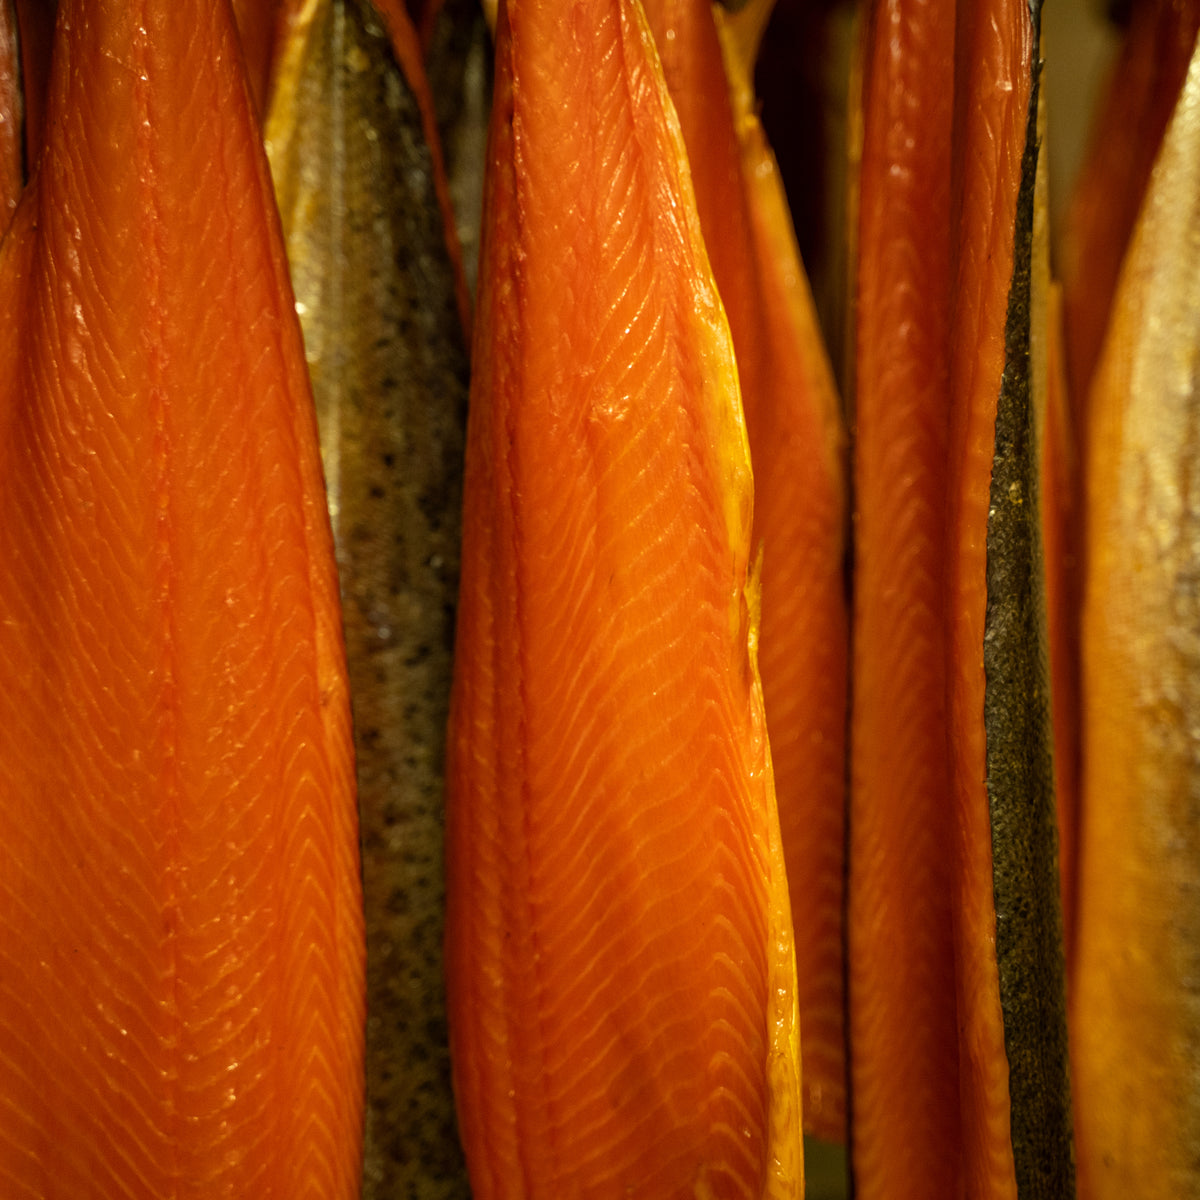 Smoked Salmon, 1kg - Sliced fillet